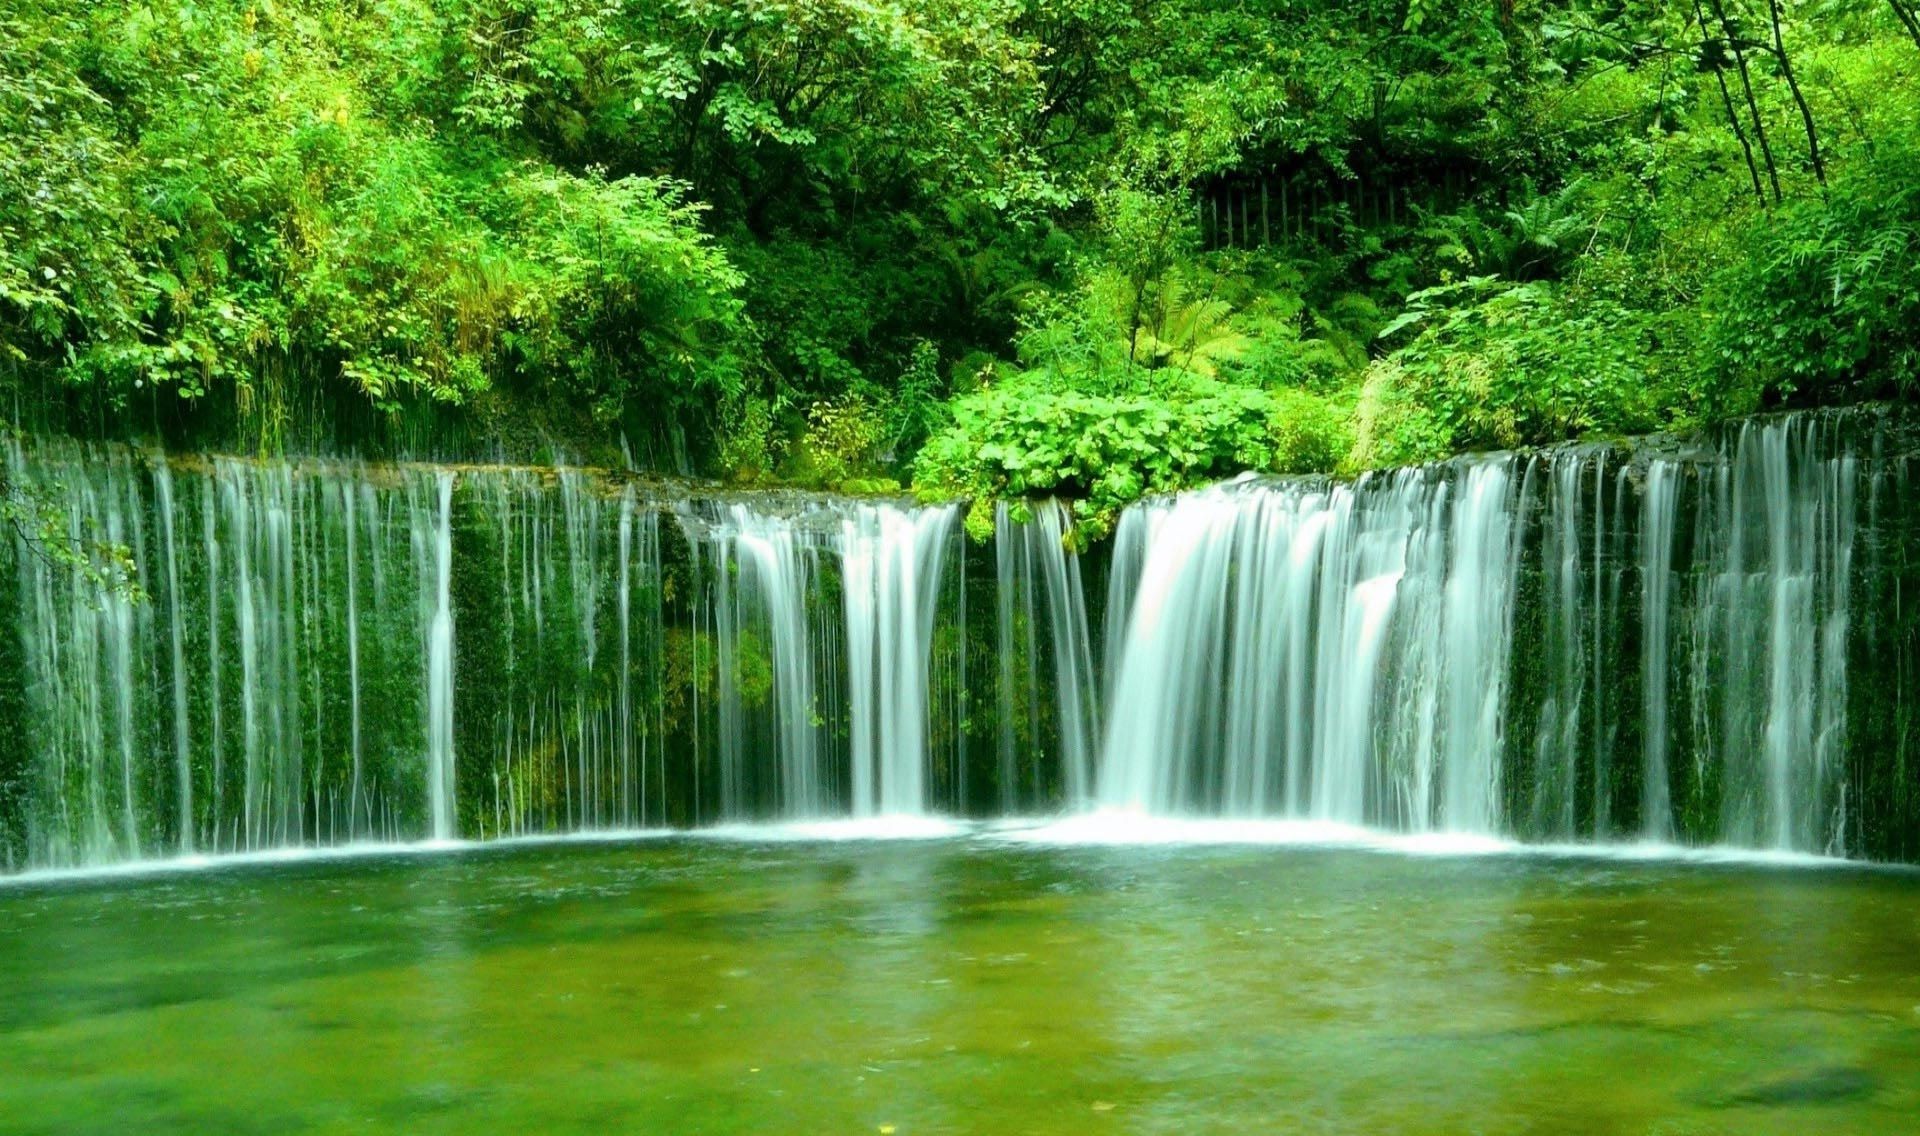 Green wallpaper with waterfalls HD Wallpaper. Waterfall wallpaper, Waterfall picture, Forest waterfall